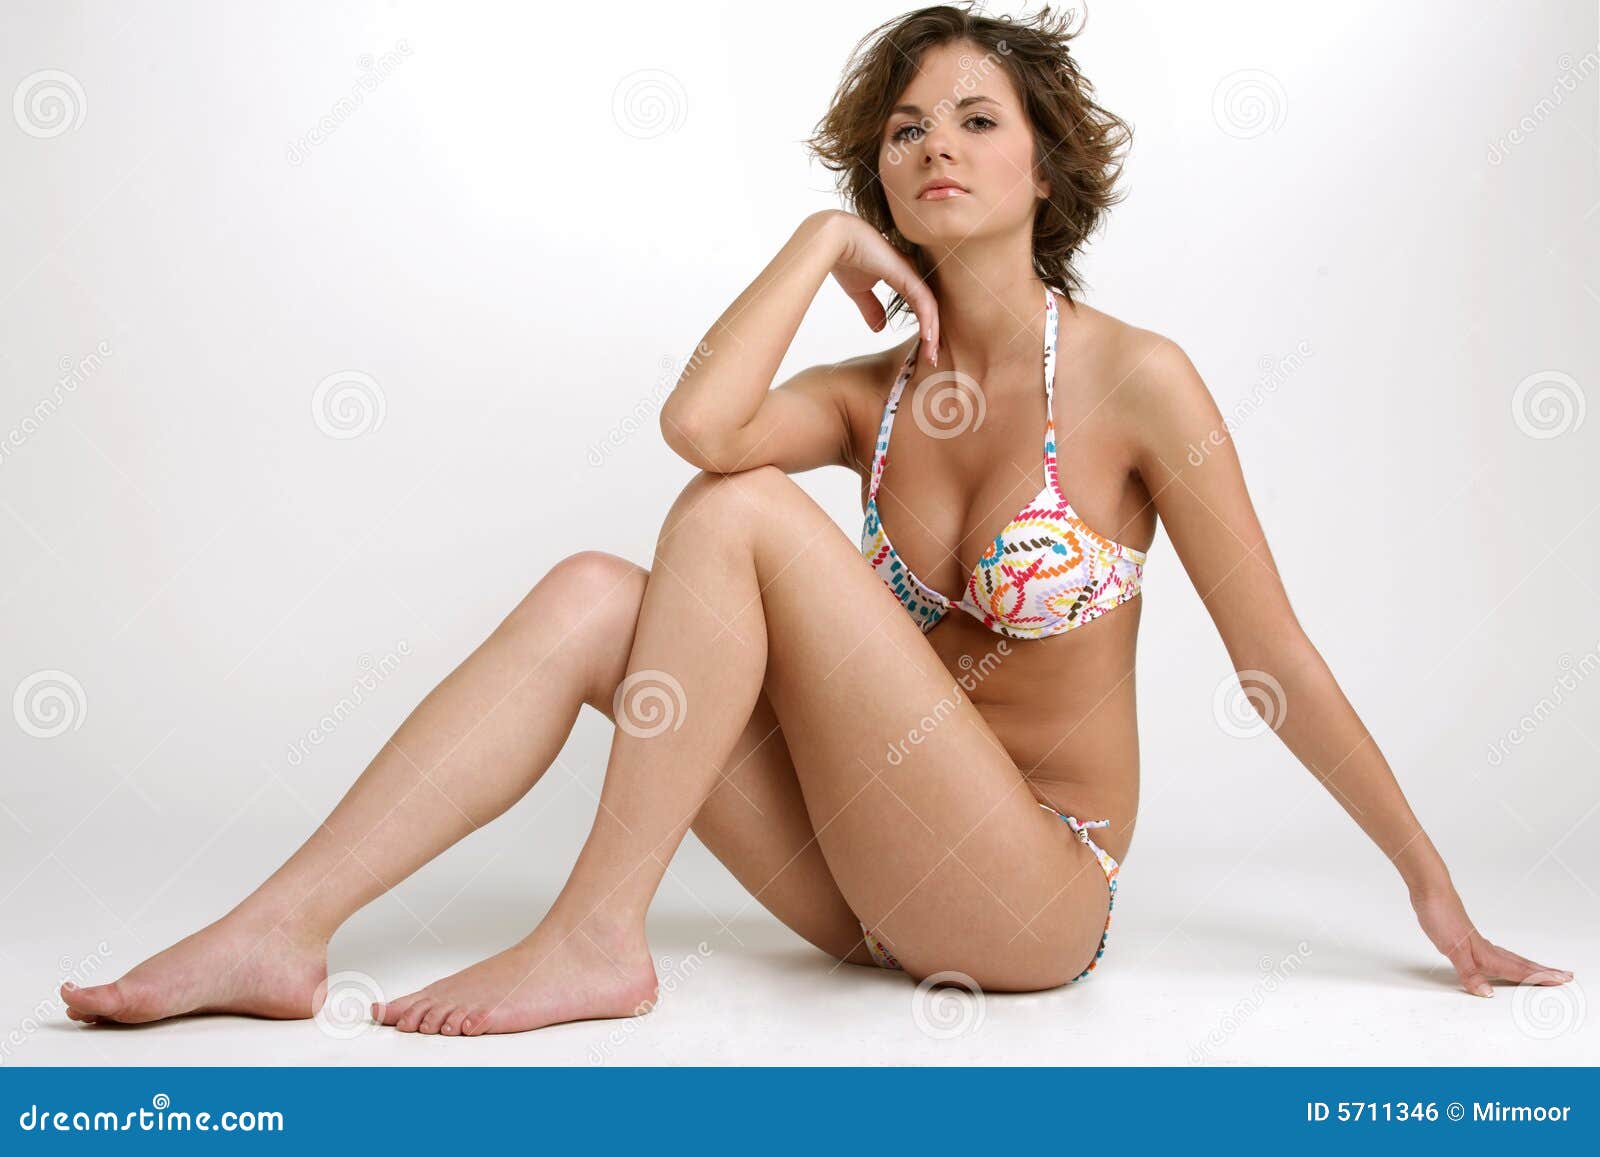 bikini brunette girl in hot photo